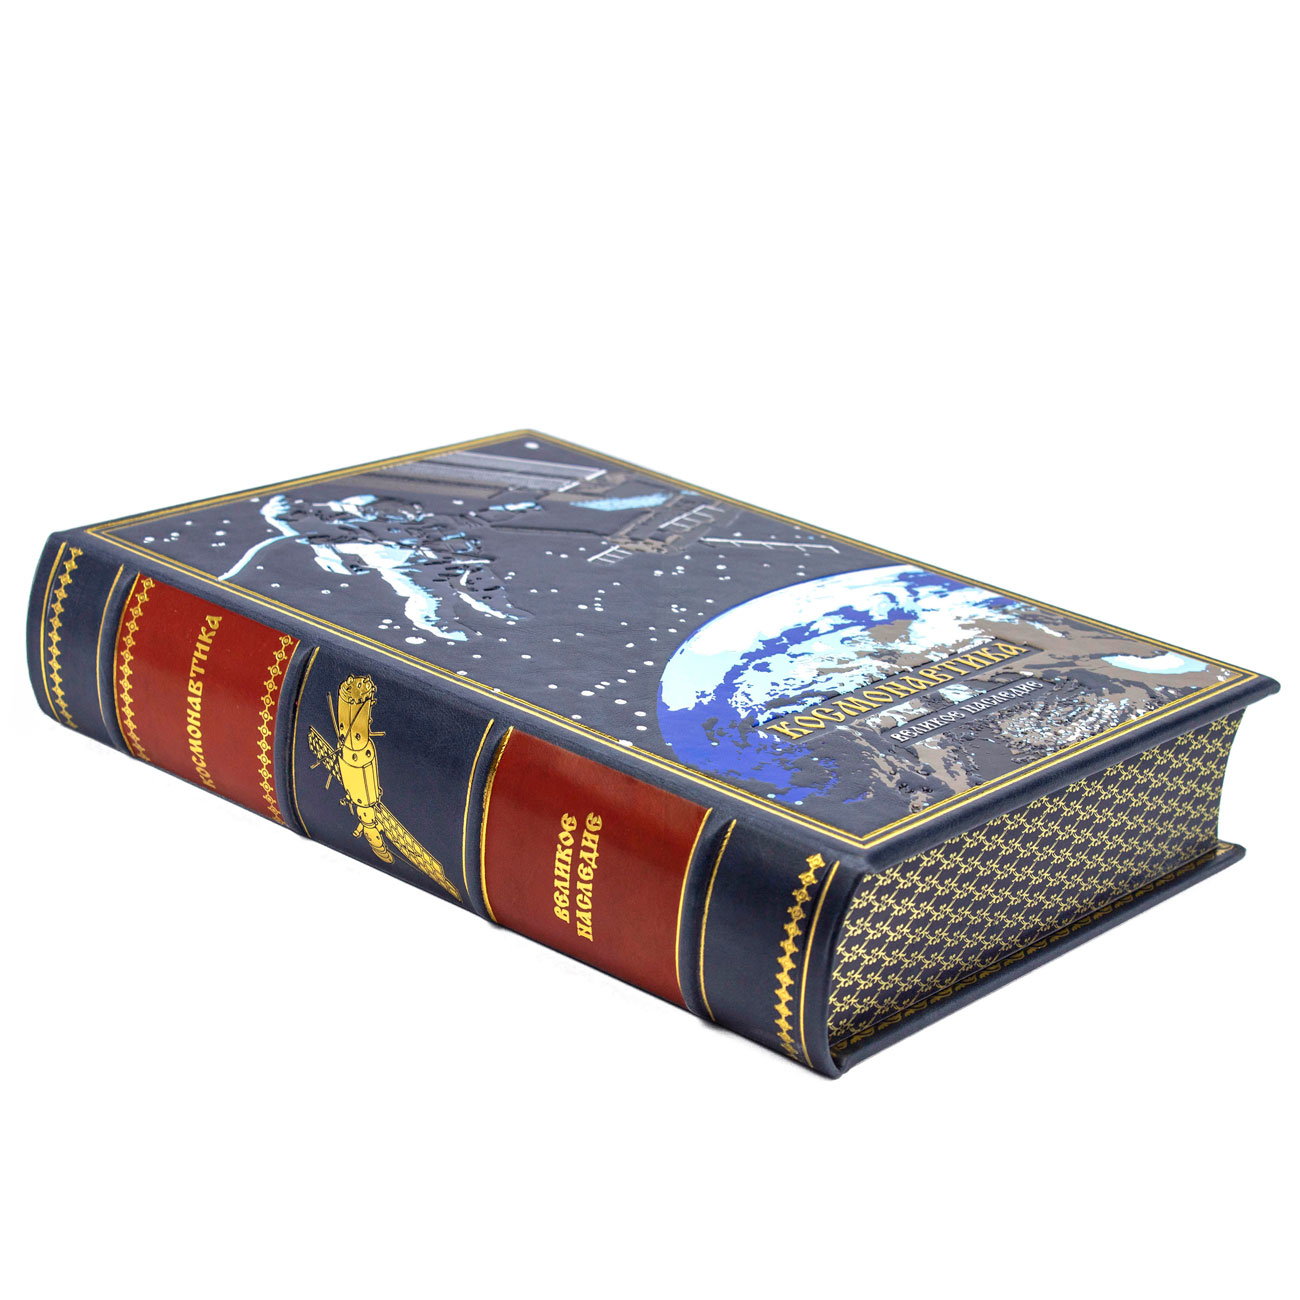 Книга в кожаном переплете "Космонавтика" - артикул: S08282 | Мосподарок 